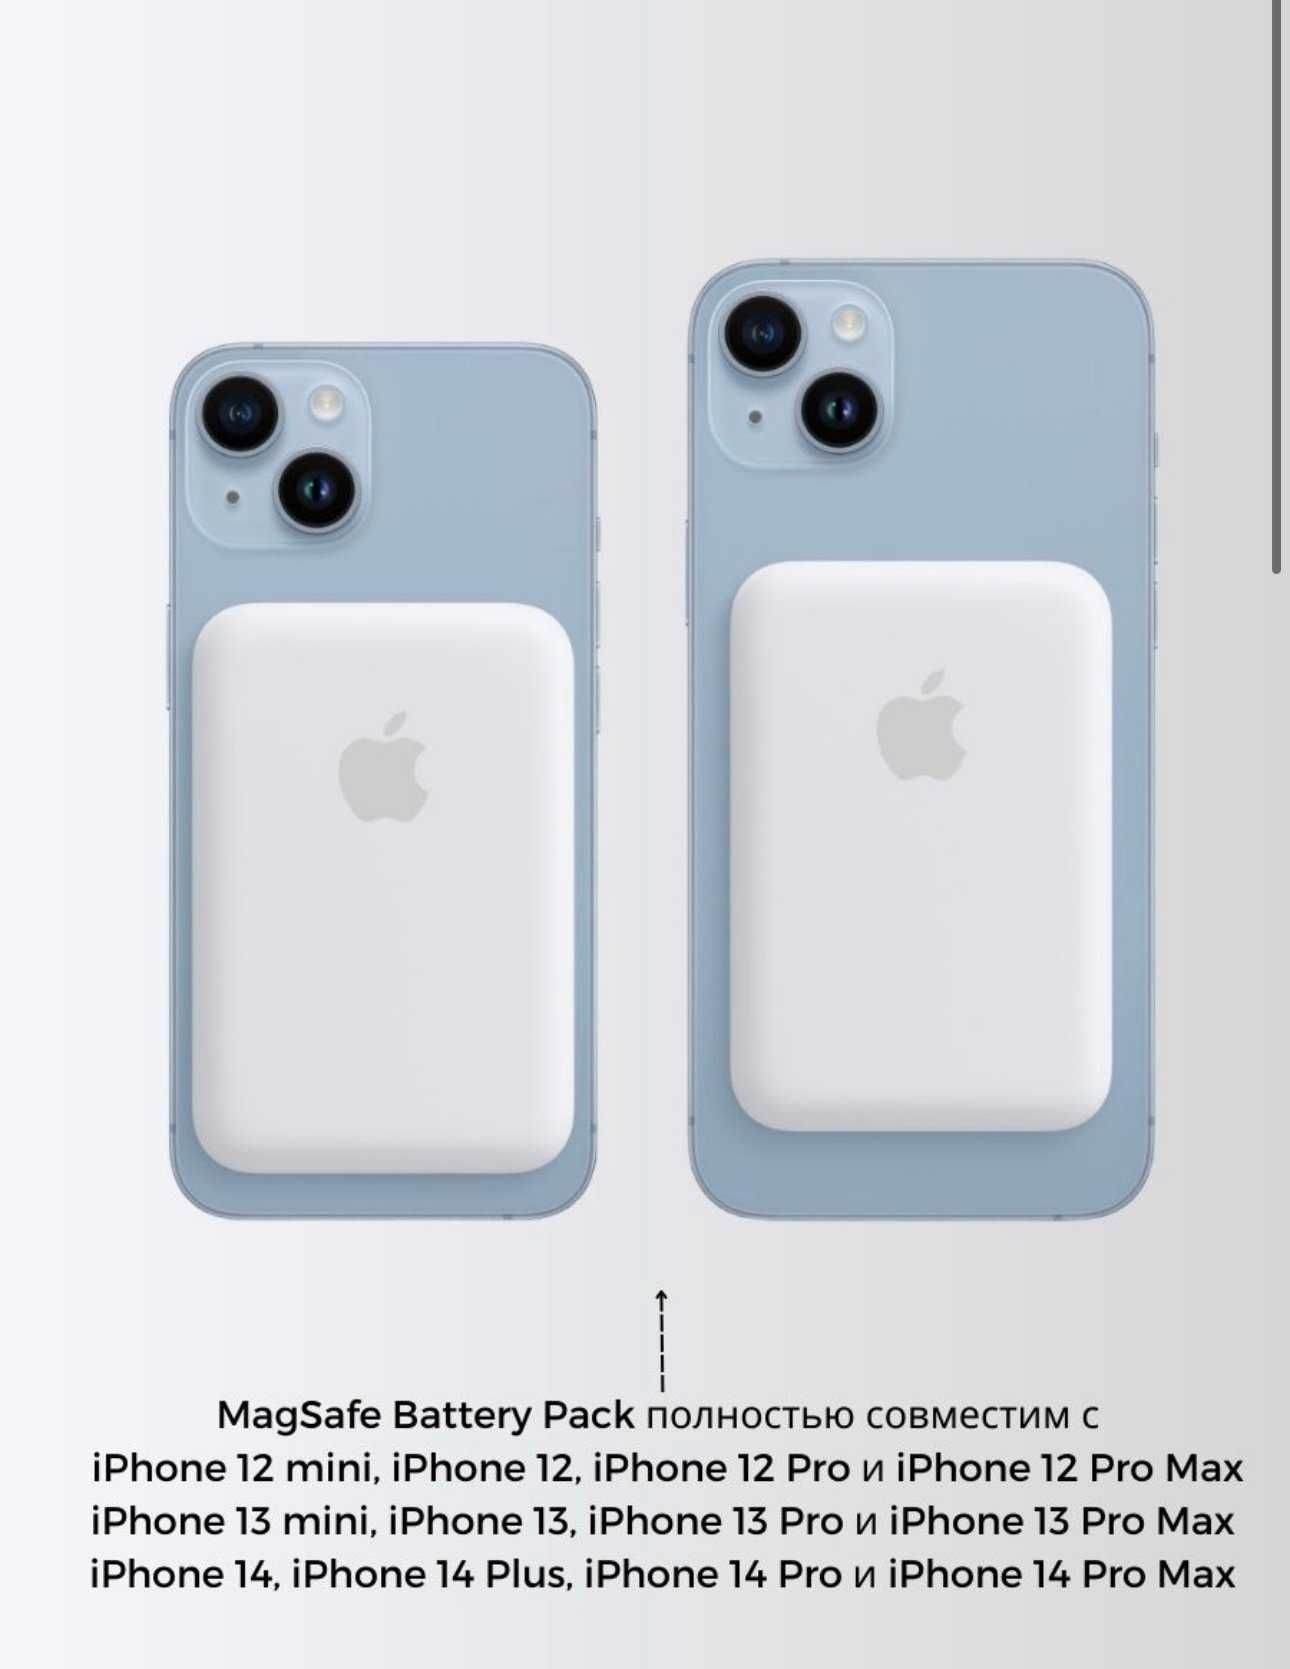 MagSafe Power Bank 10000 мА/ч, Battery Pack для iPhone